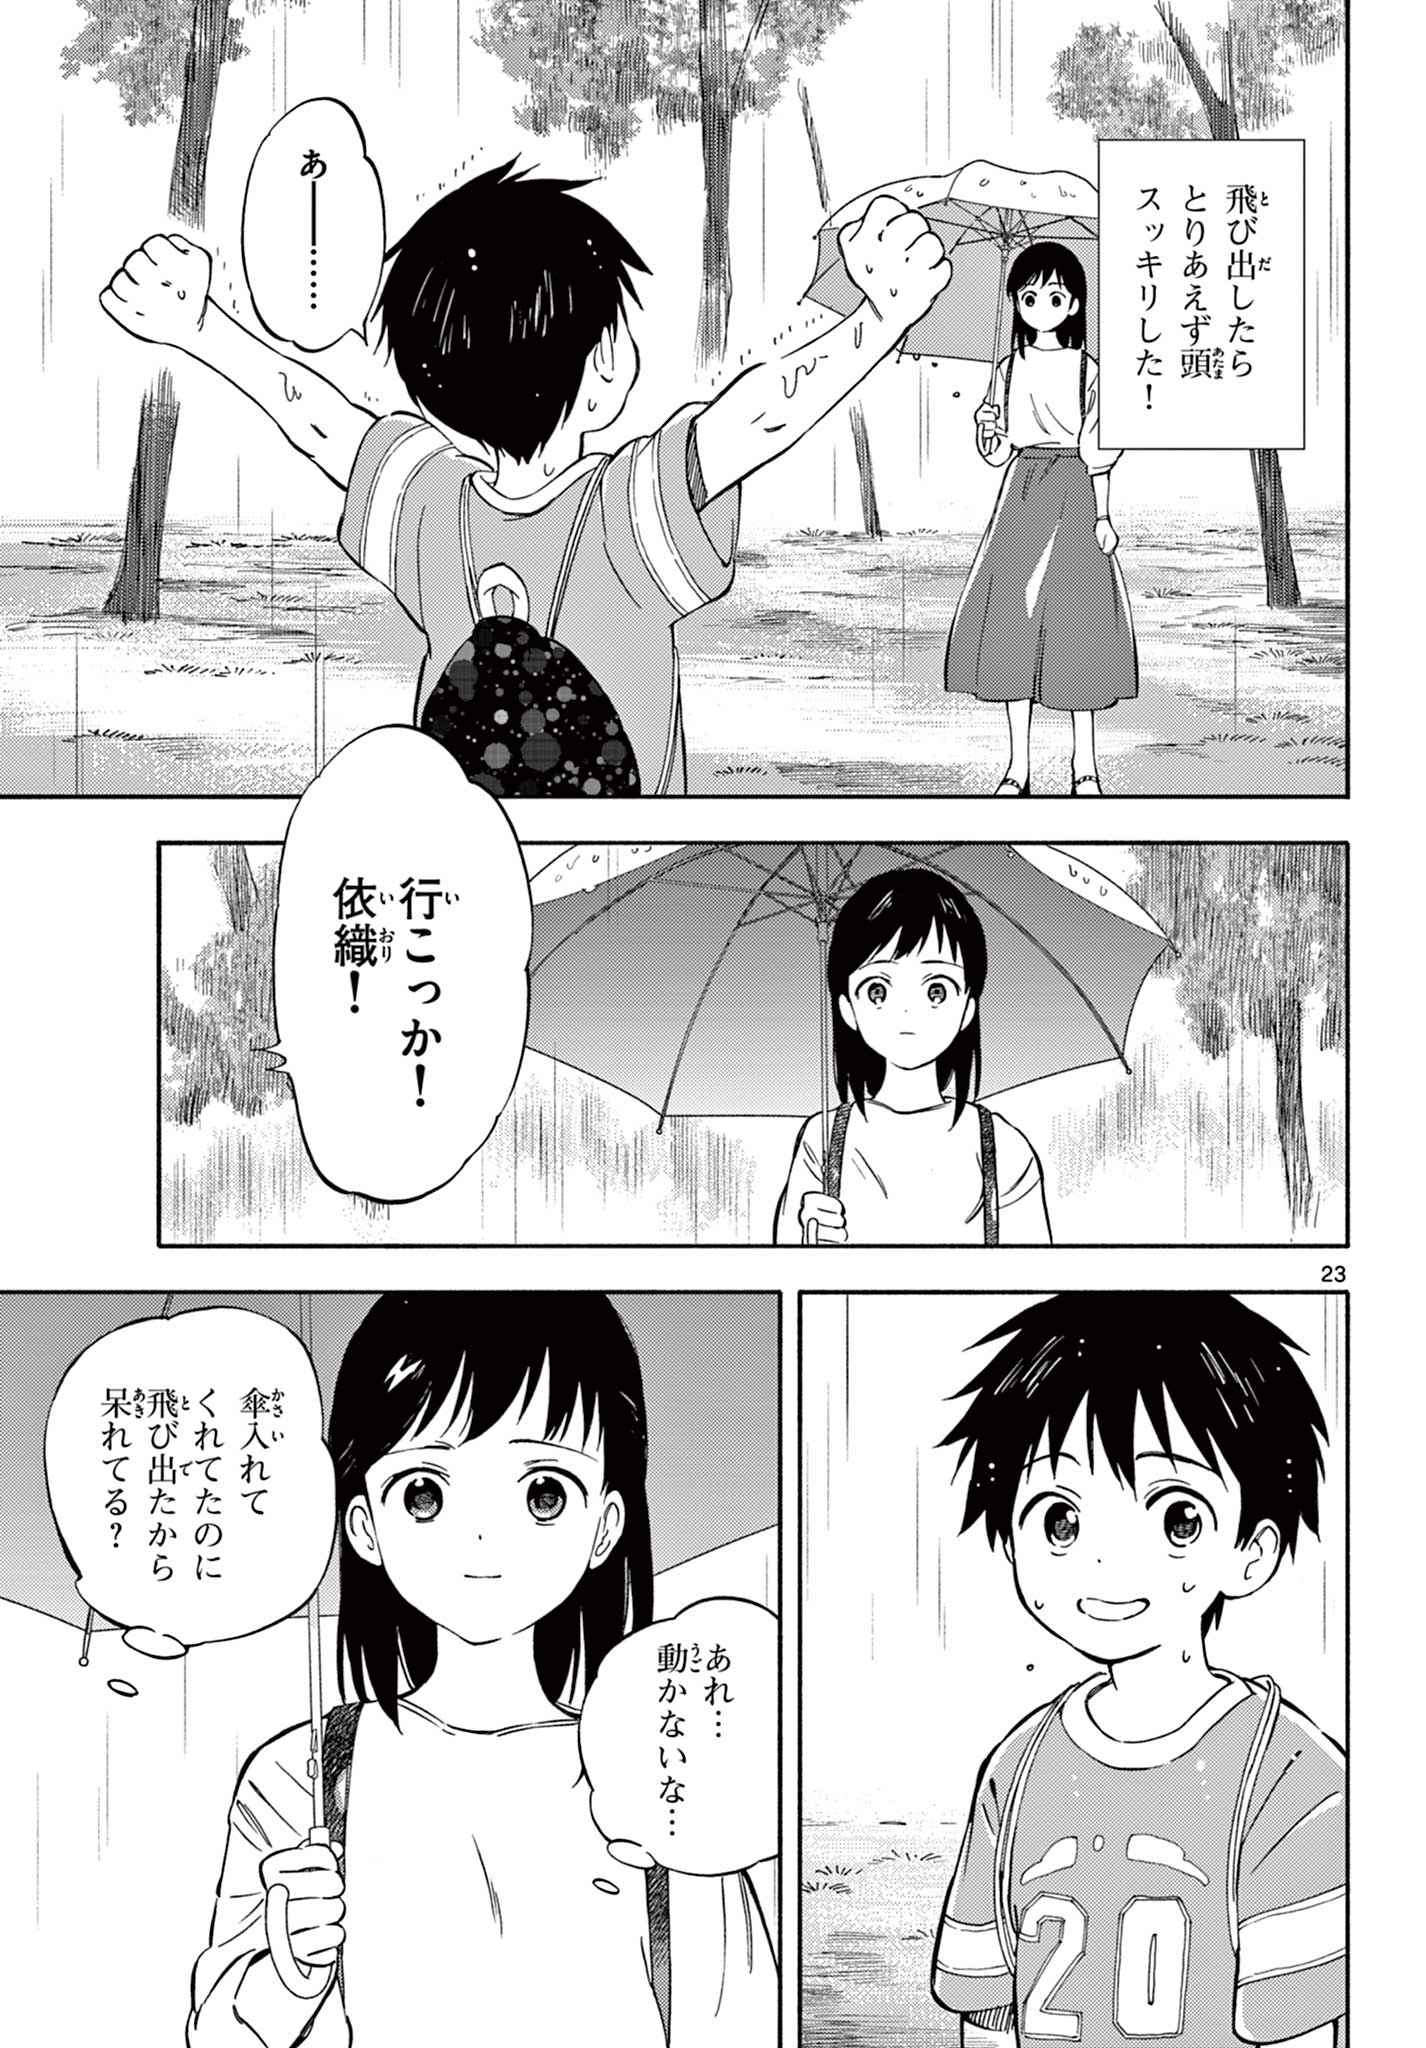 Nami no Shijima no Horizont - Chapter 9.2 - Page 11